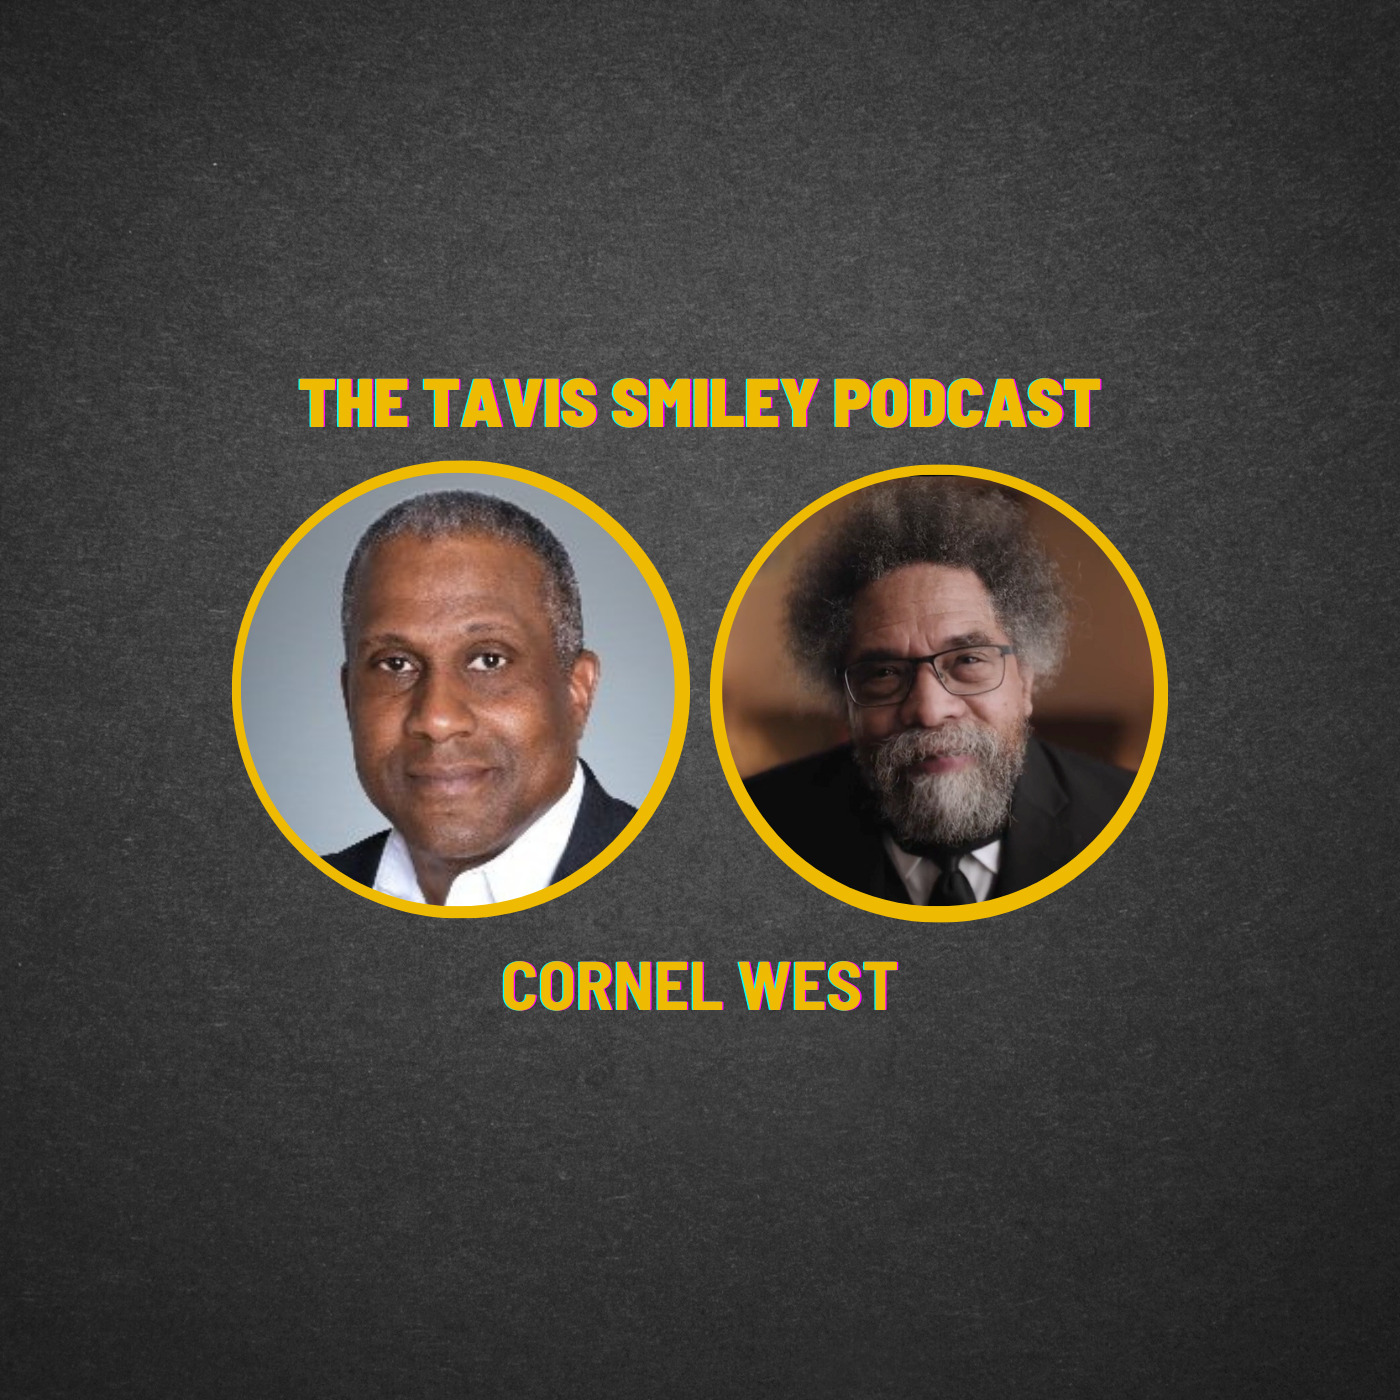 Cornel West joins Tavis Smiley